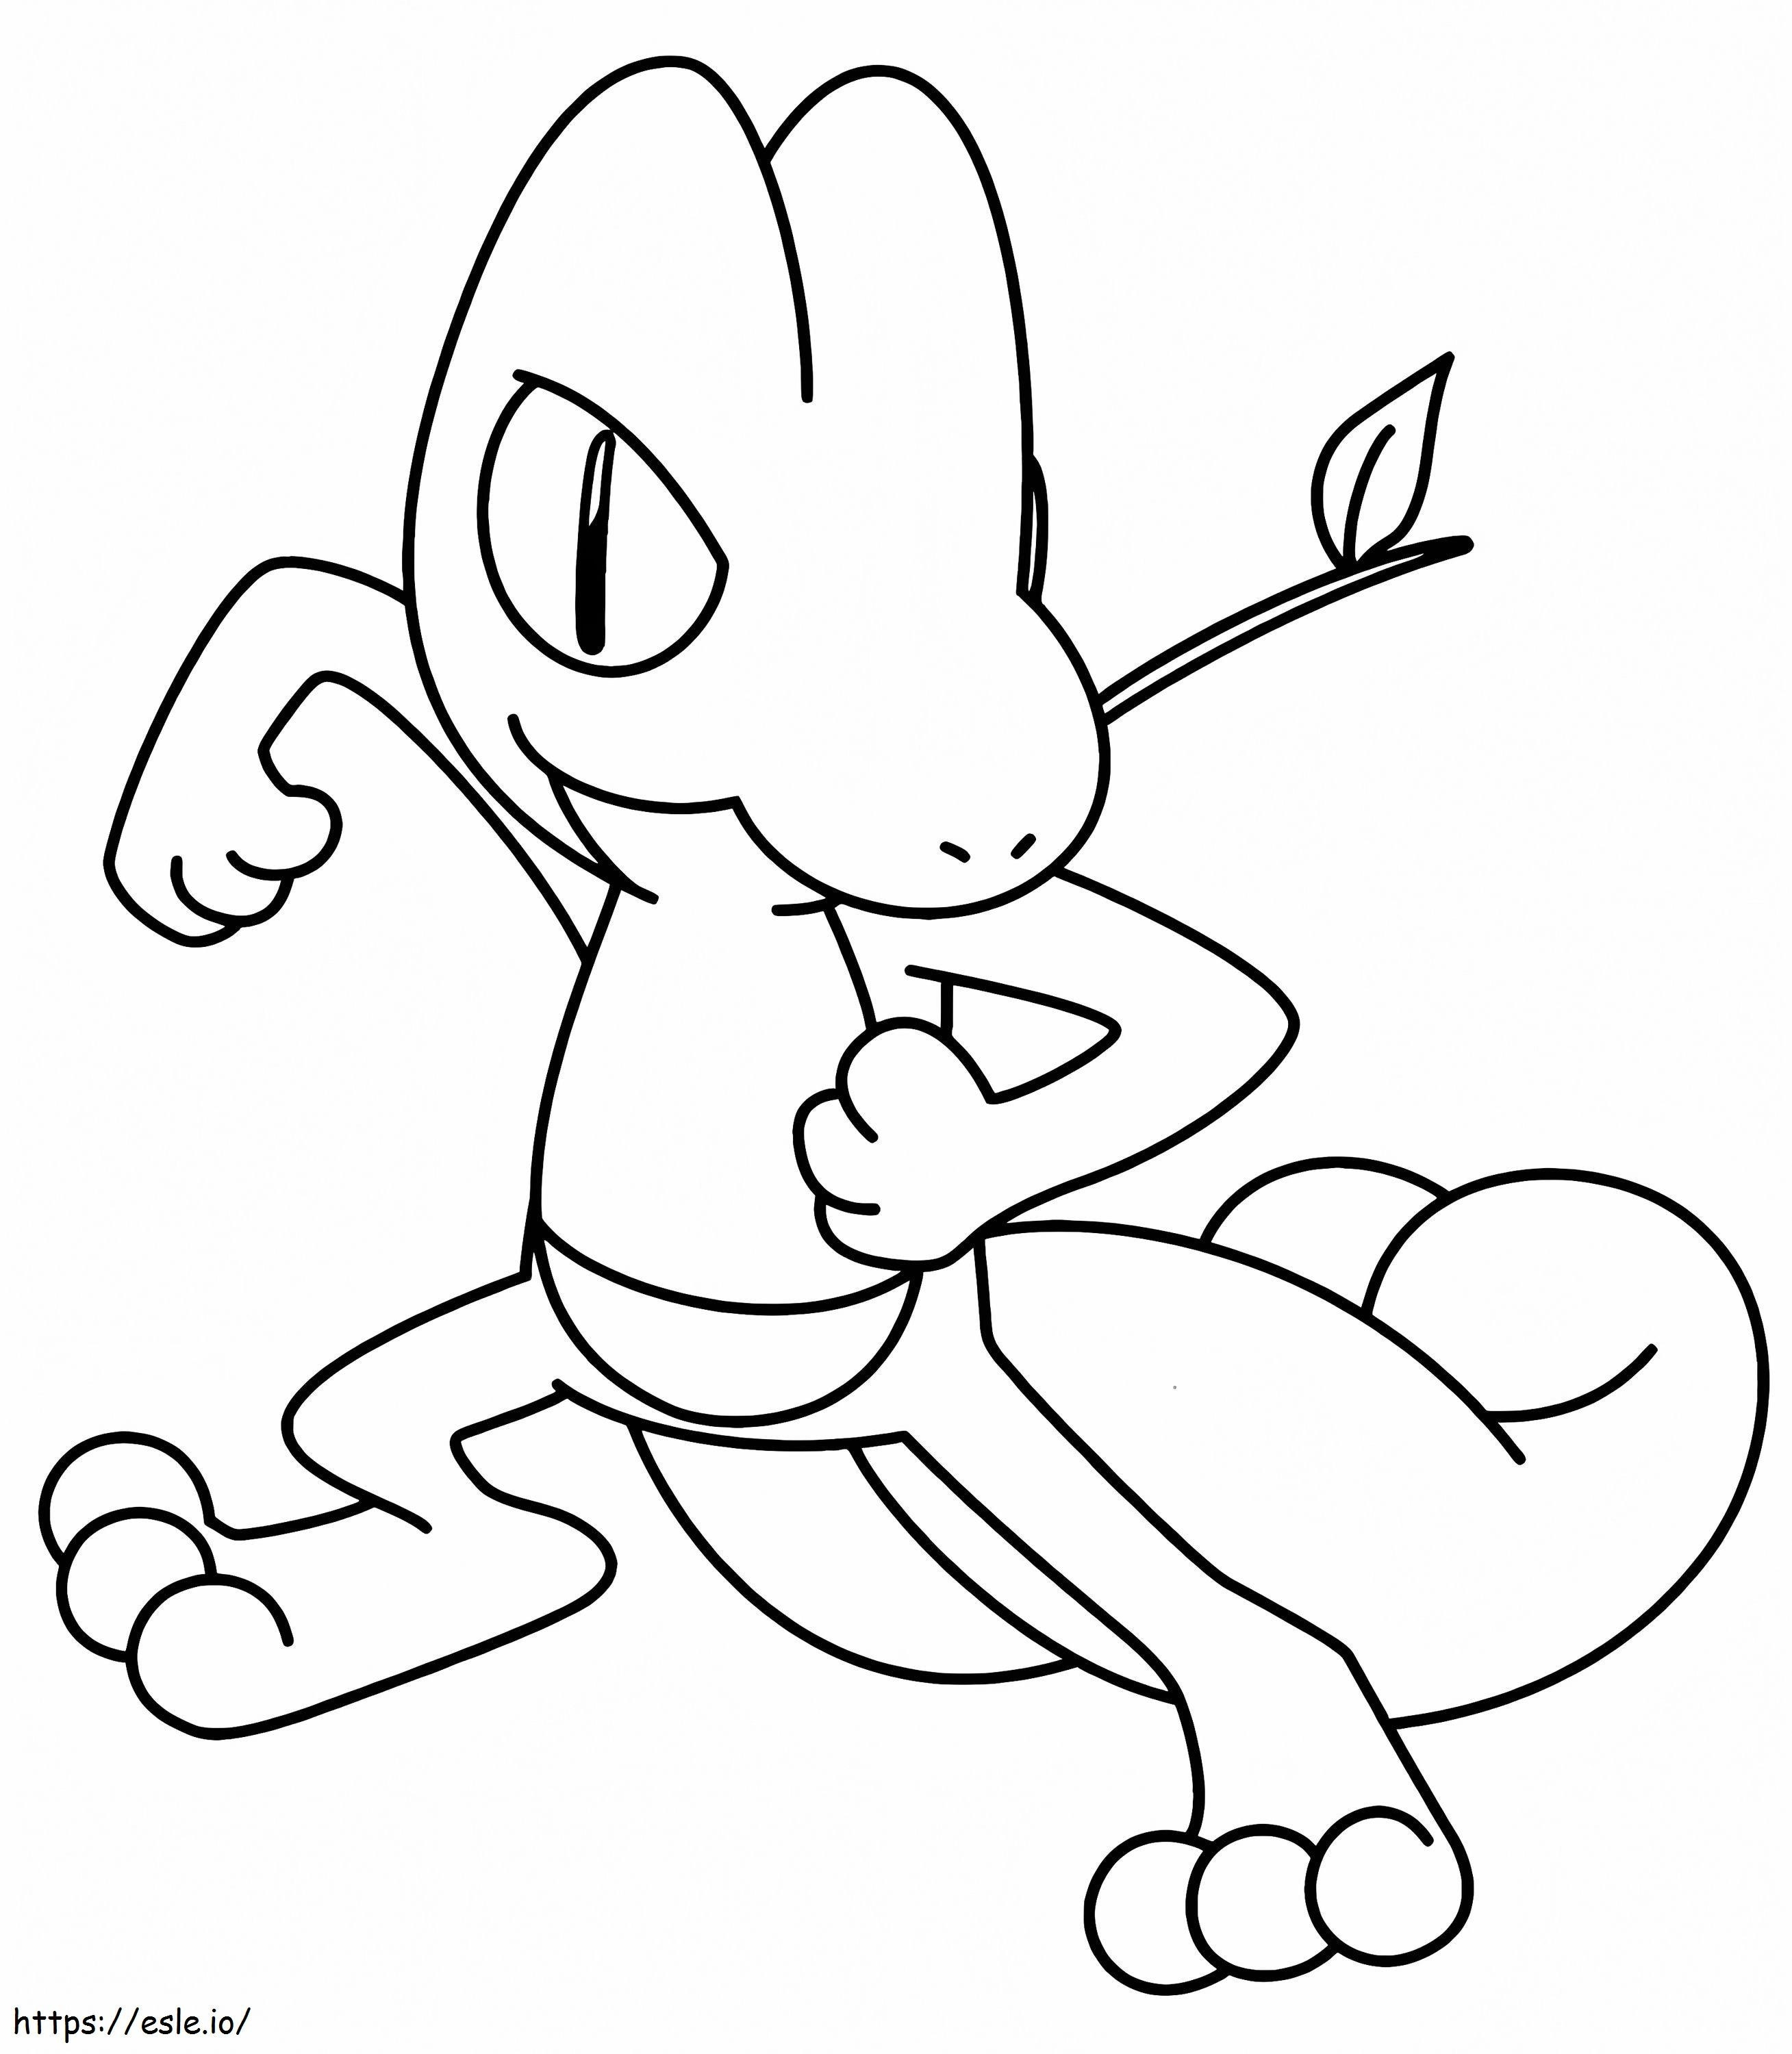 Cooles Treecko-Pokémon ausmalbilder